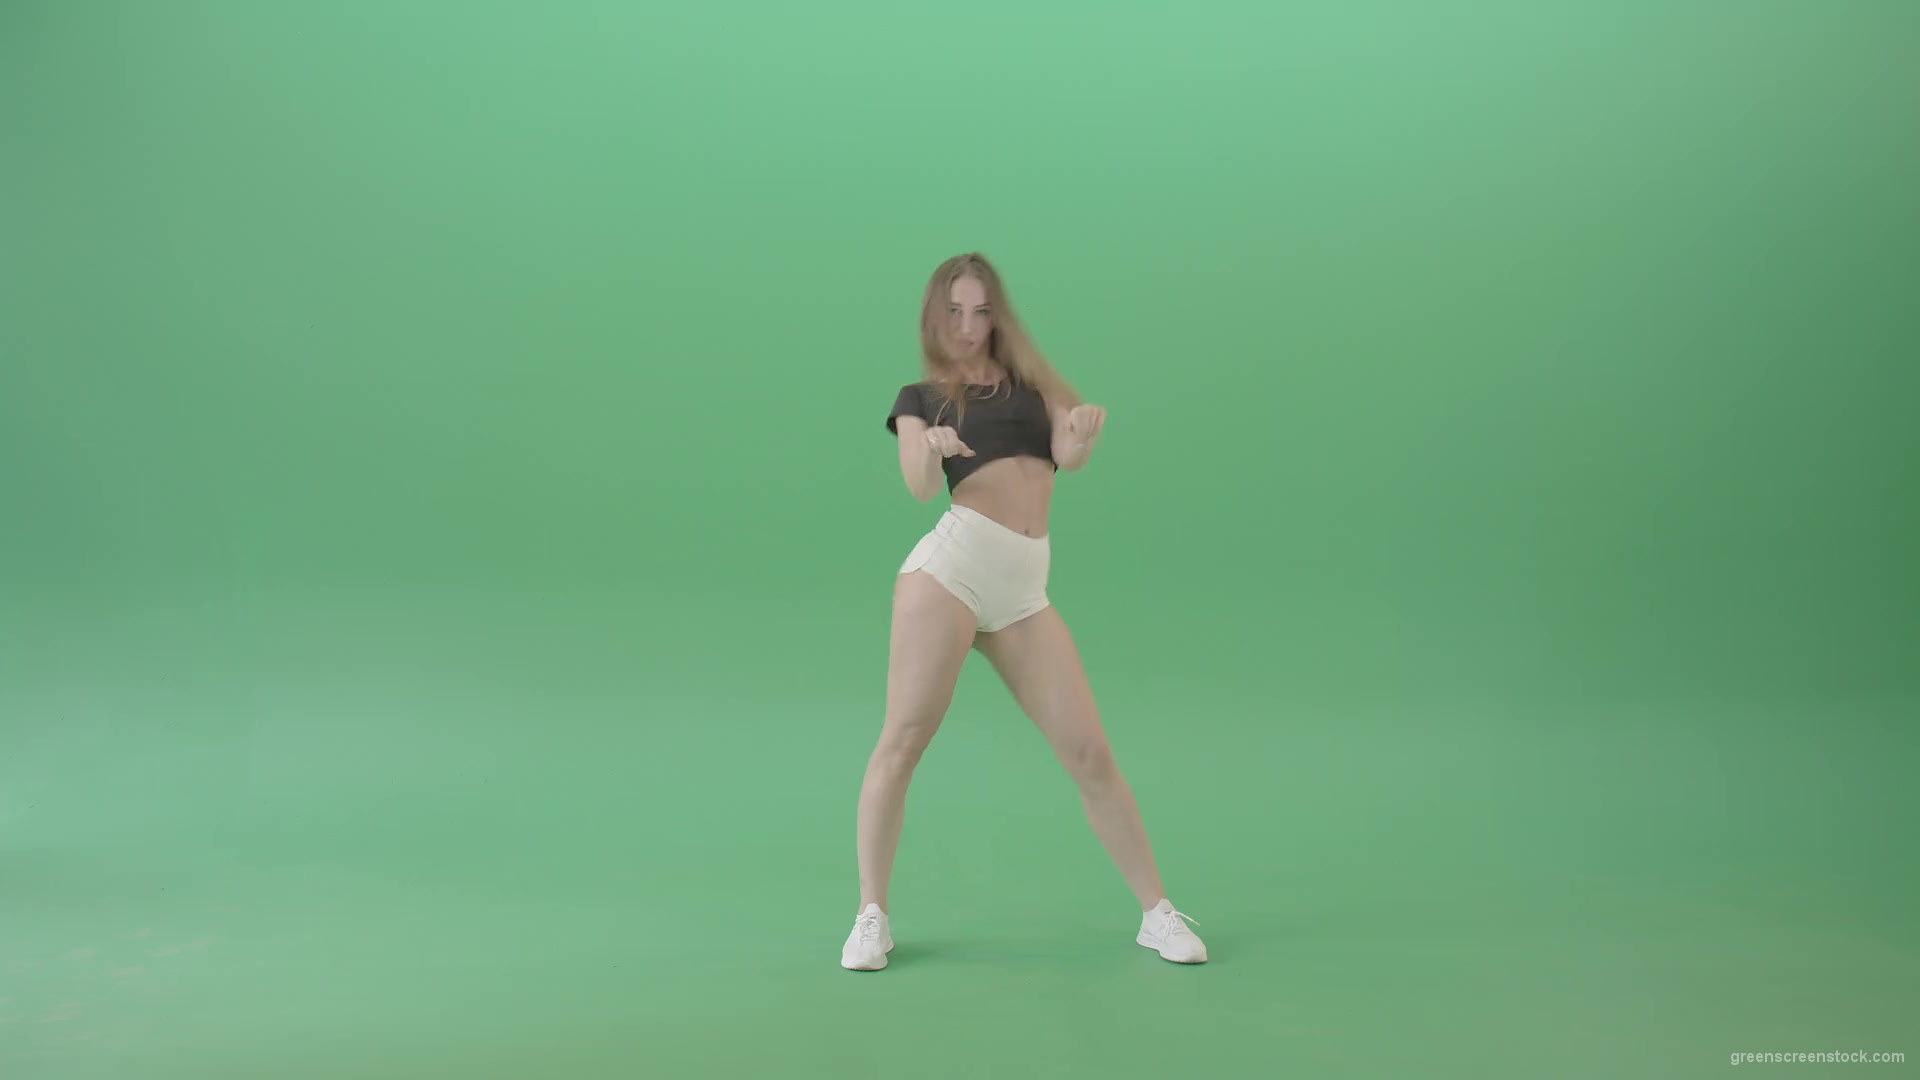 Long-dancing-Video-Footage-of-Twerking-Girl-shaking-ass-and-dancing-over-Green-Screen-1920_005 Green Screen Stock